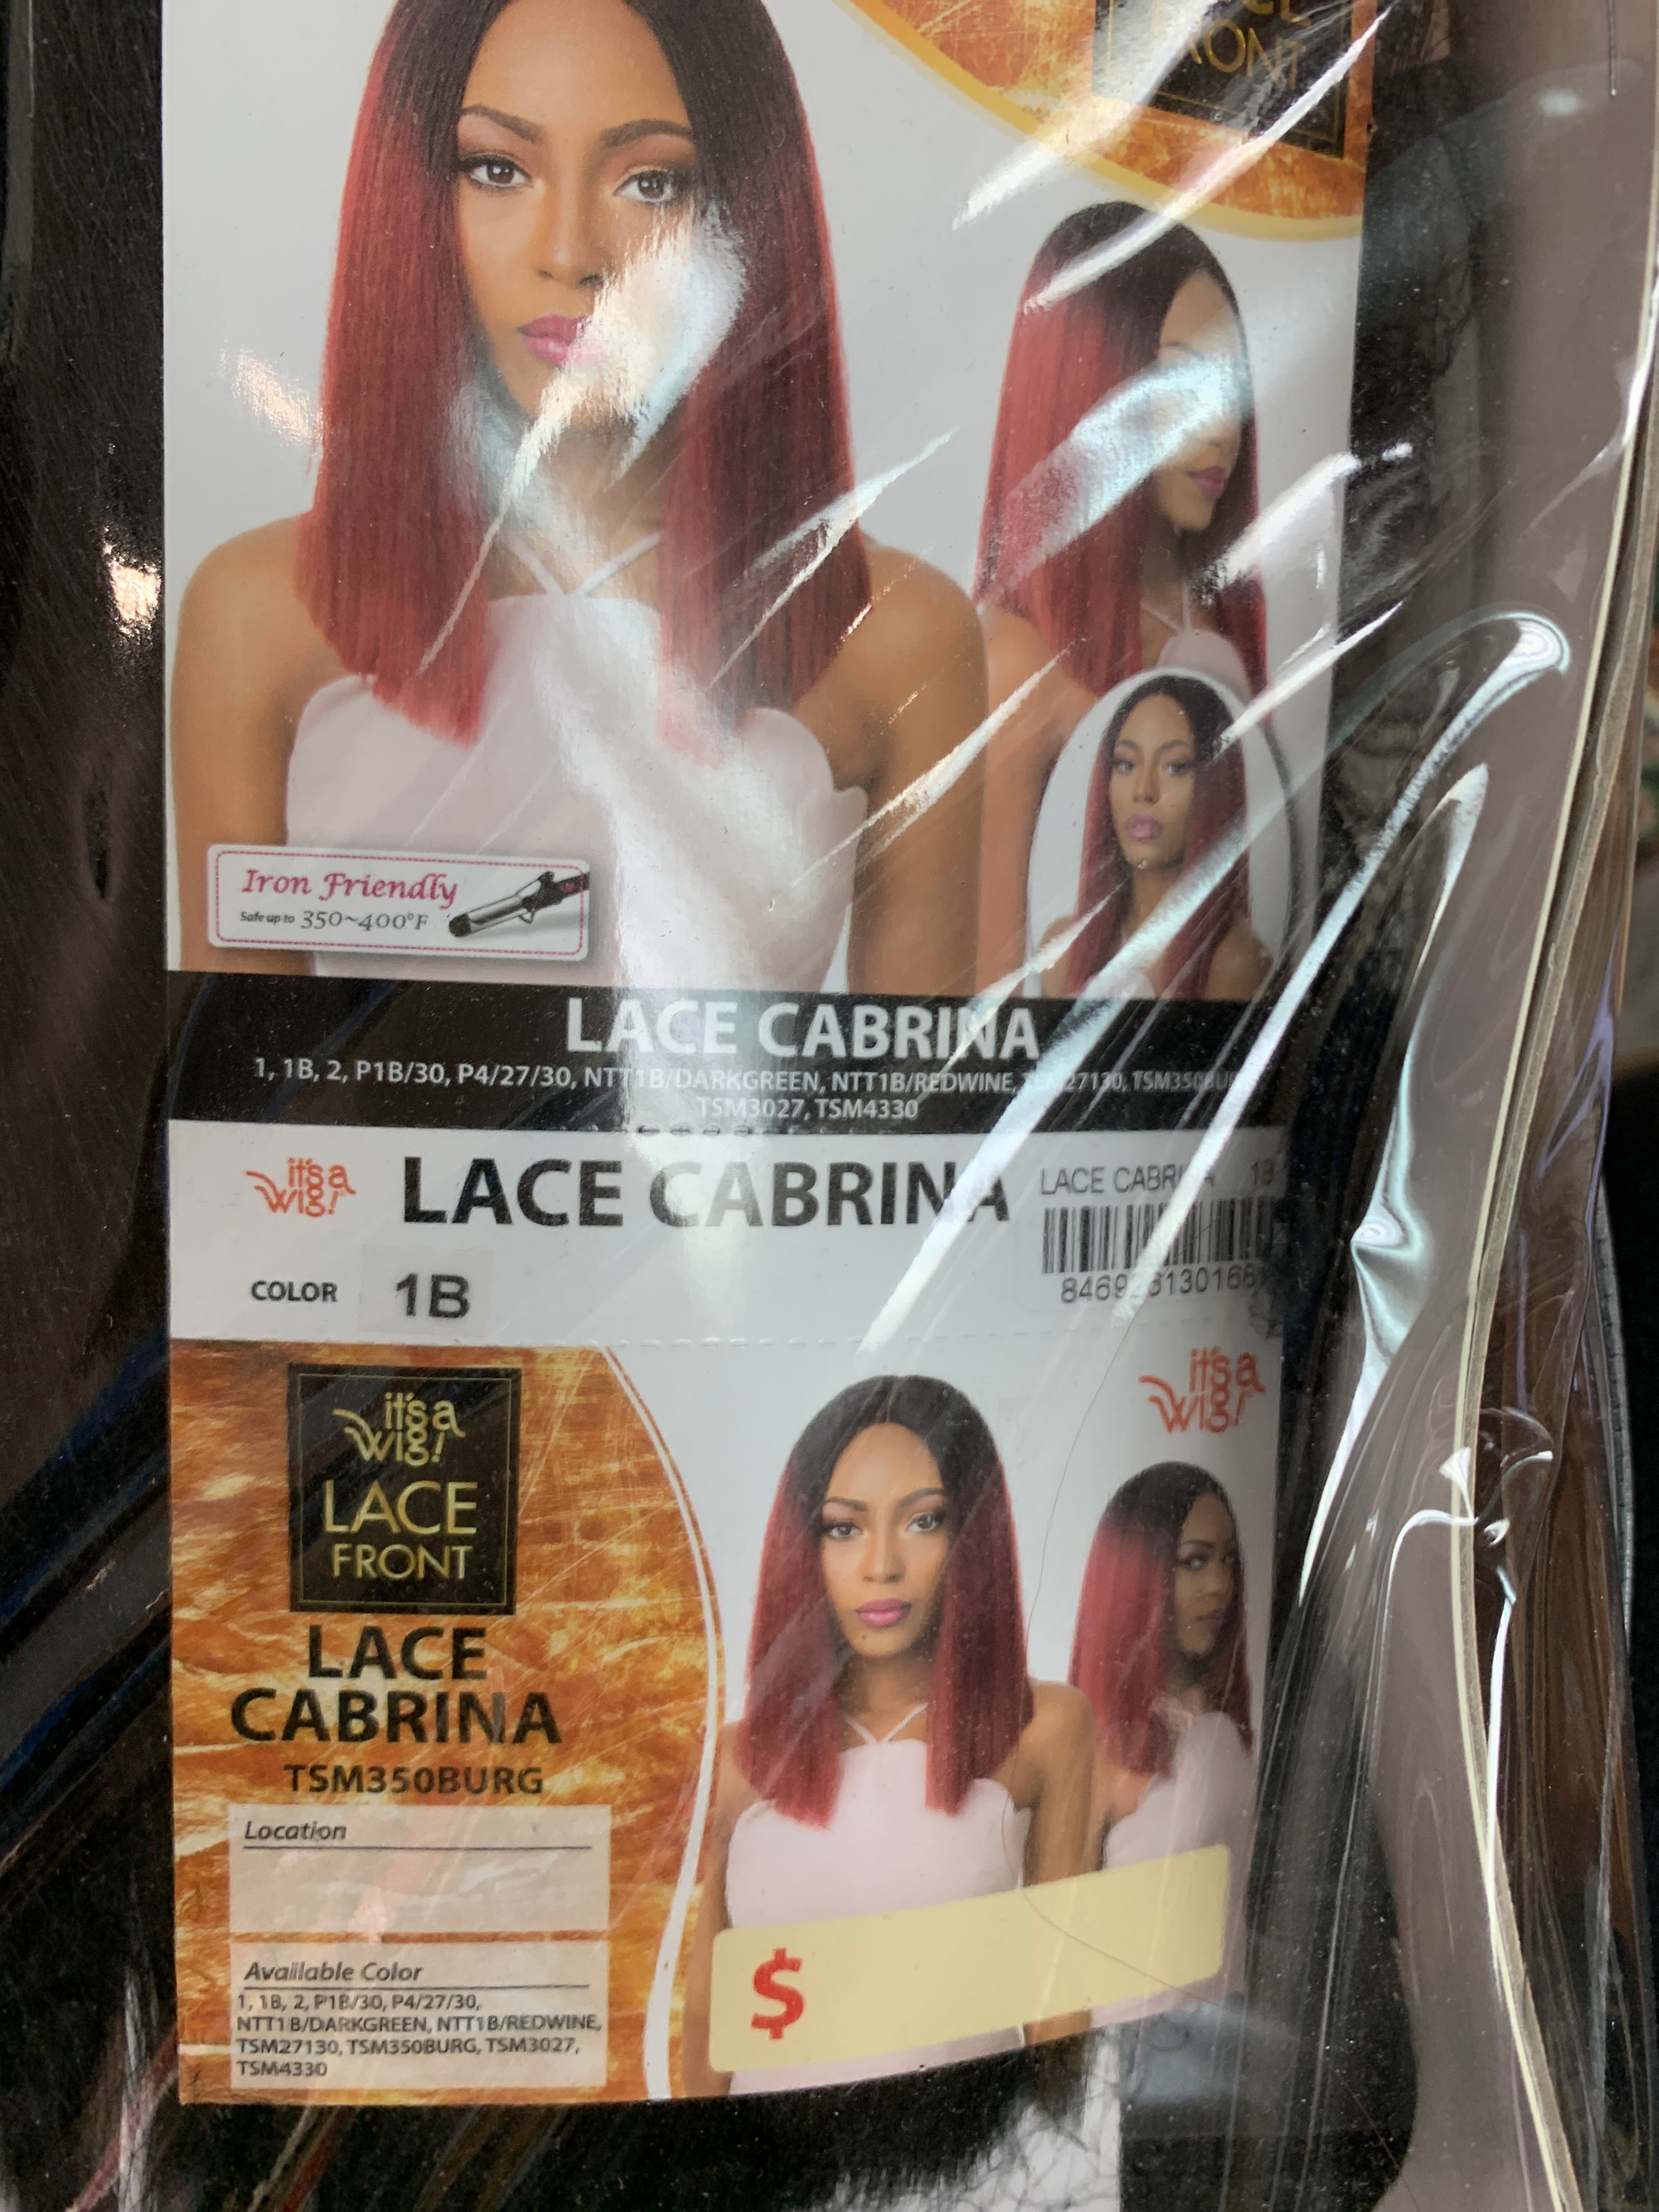 It’s a wig lace cabrina